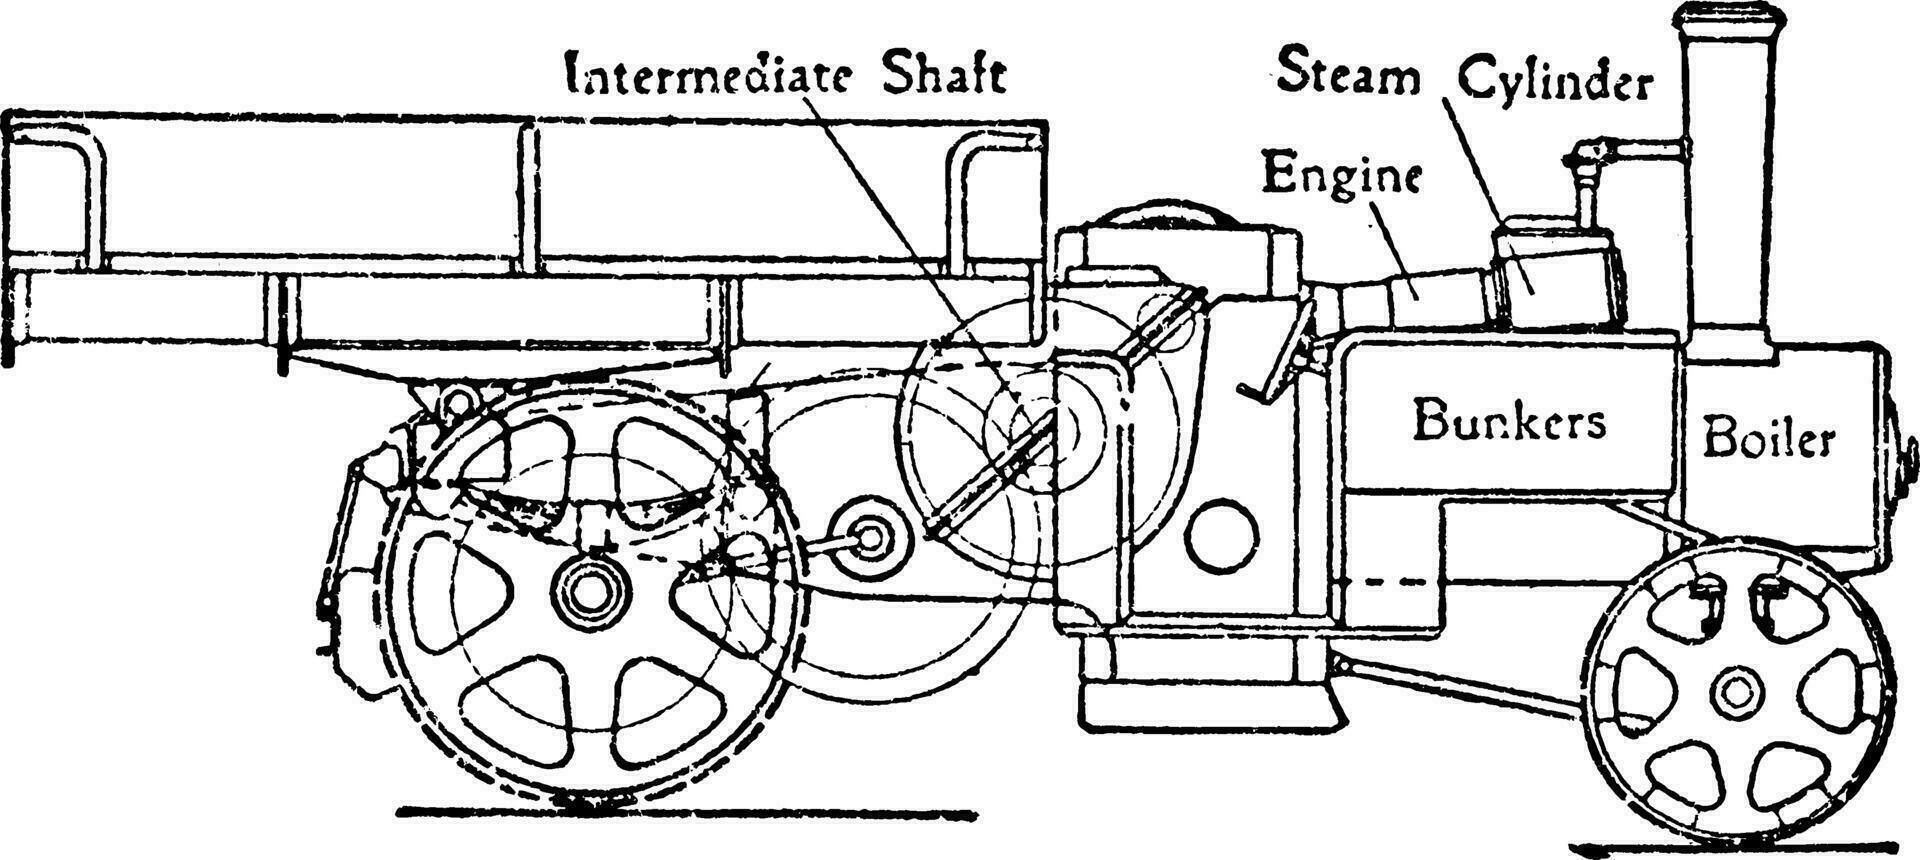 stoom- bediend wagon met transmissie tandwieloverbrenging met dubbele spiraalvormig versnelling, wijnoogst illustratie. vector